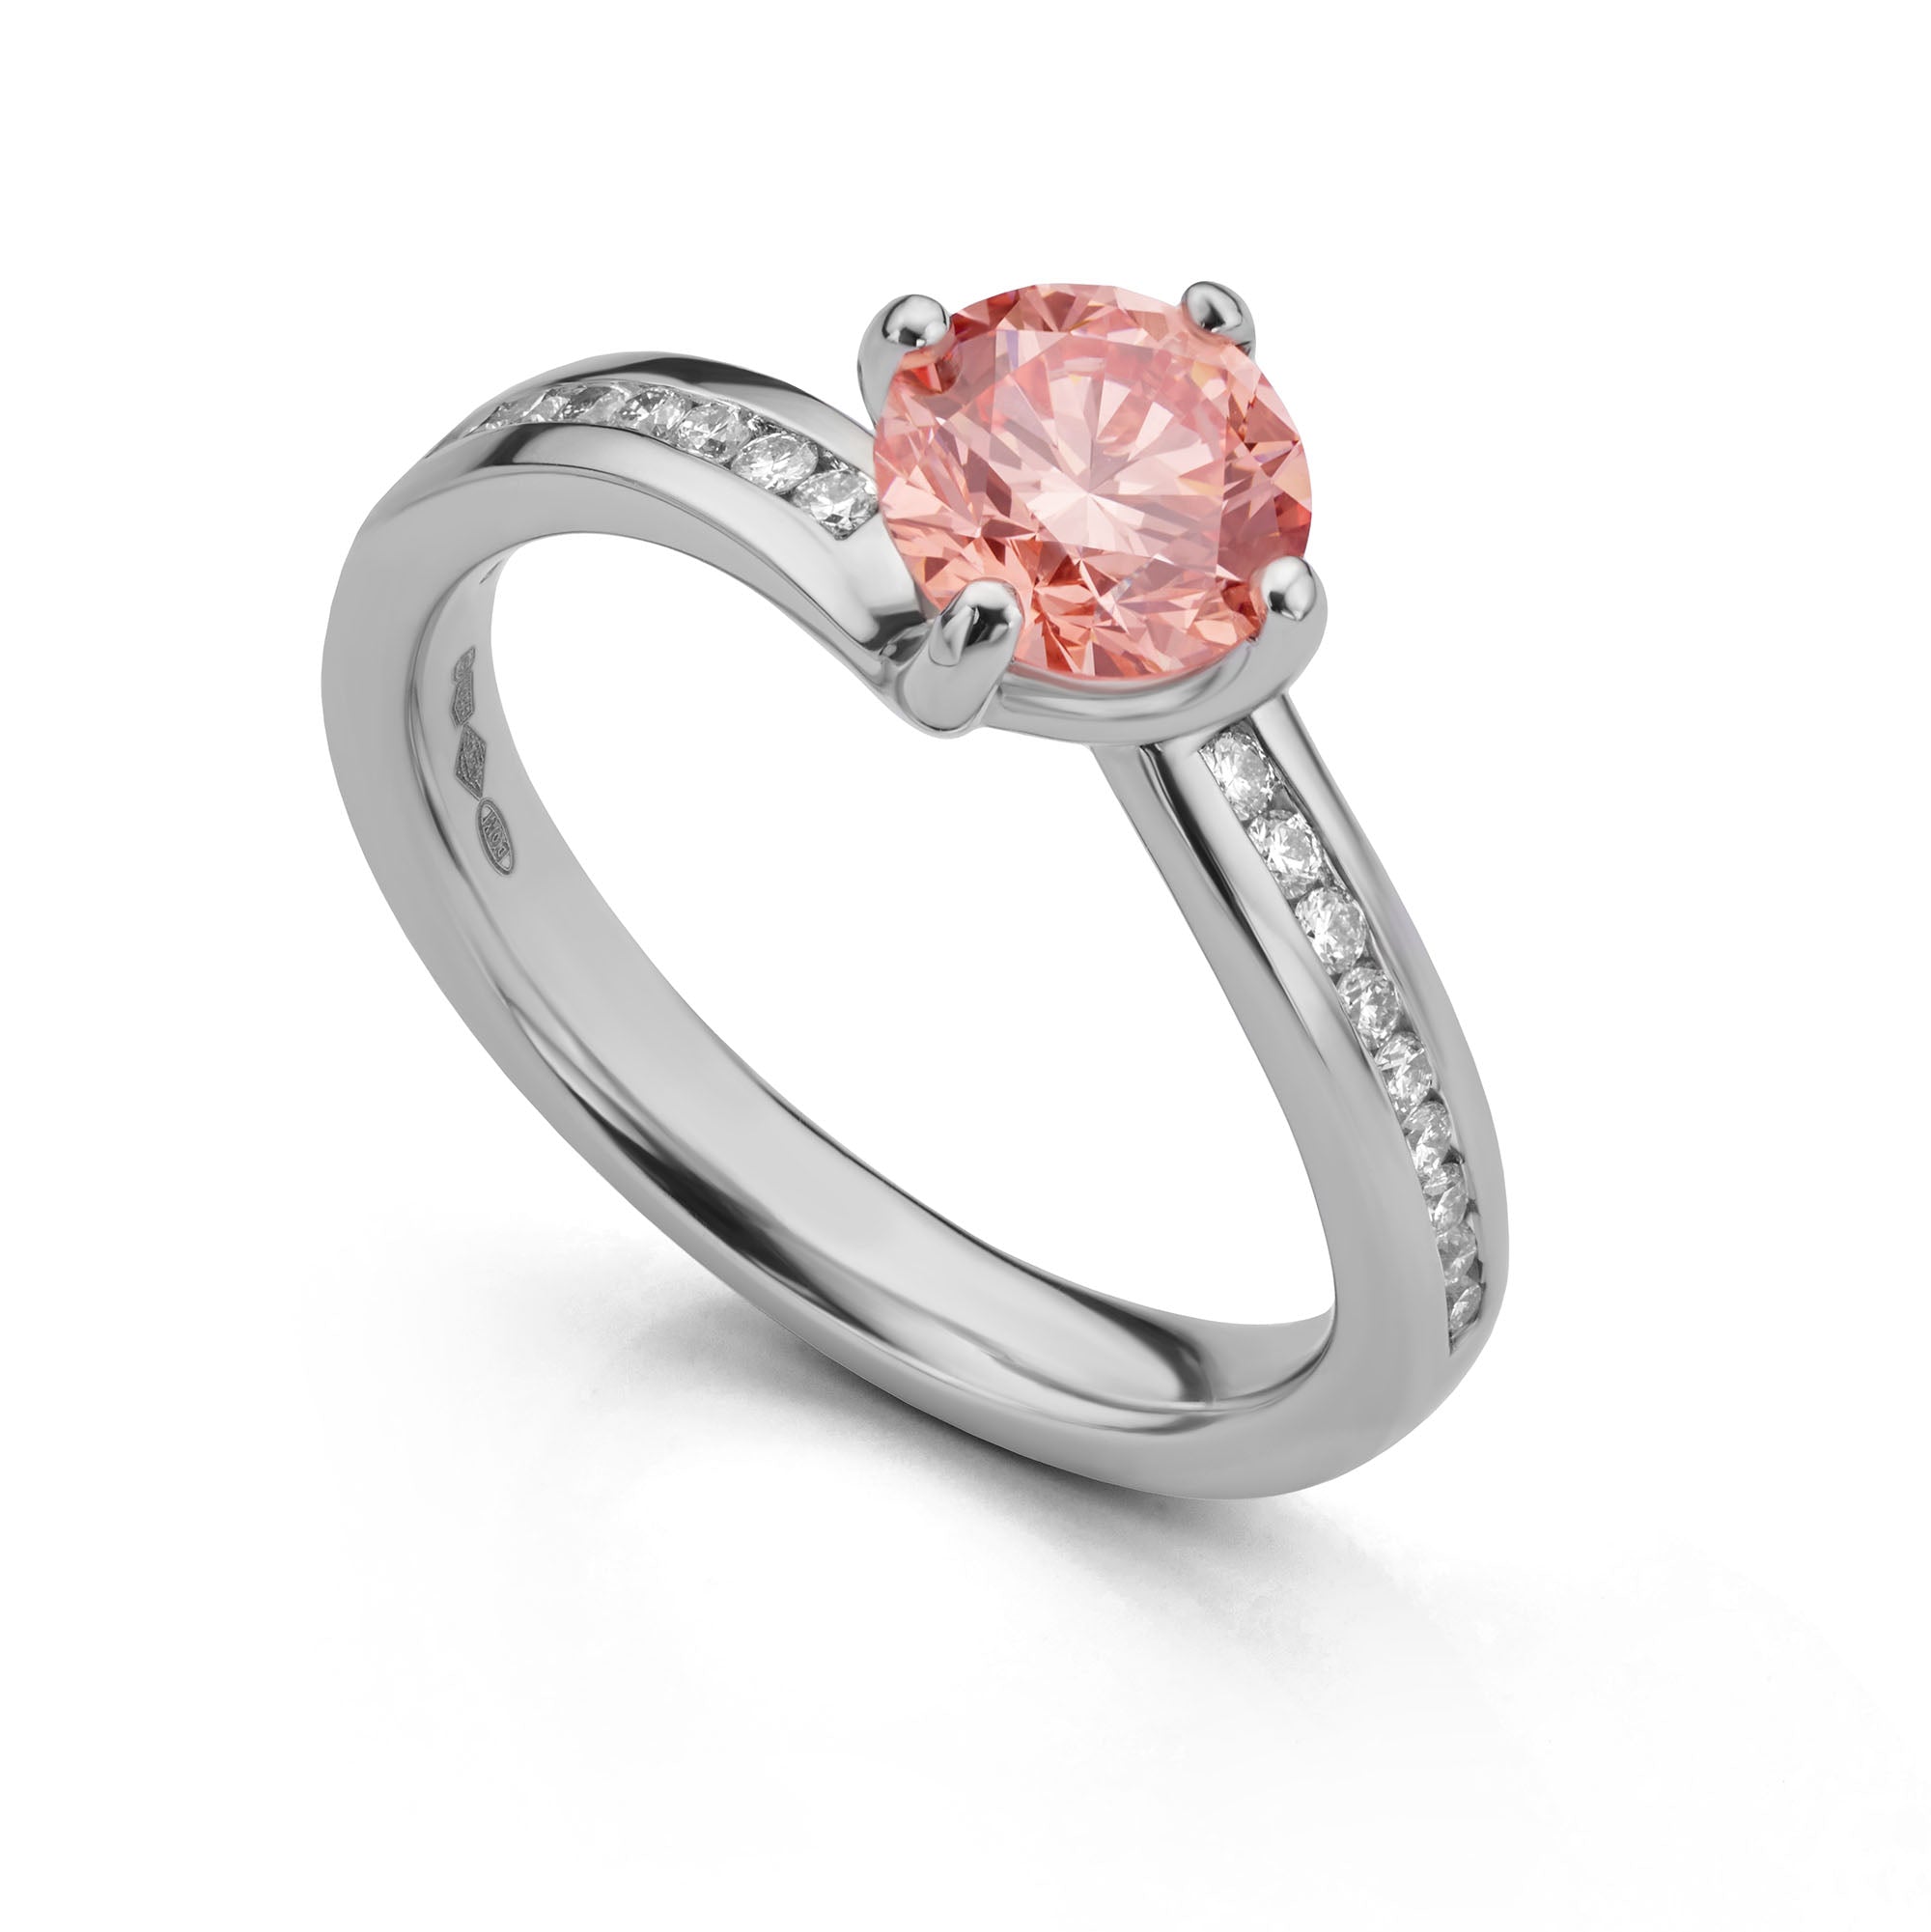 Pink diamond engagement ring on white background